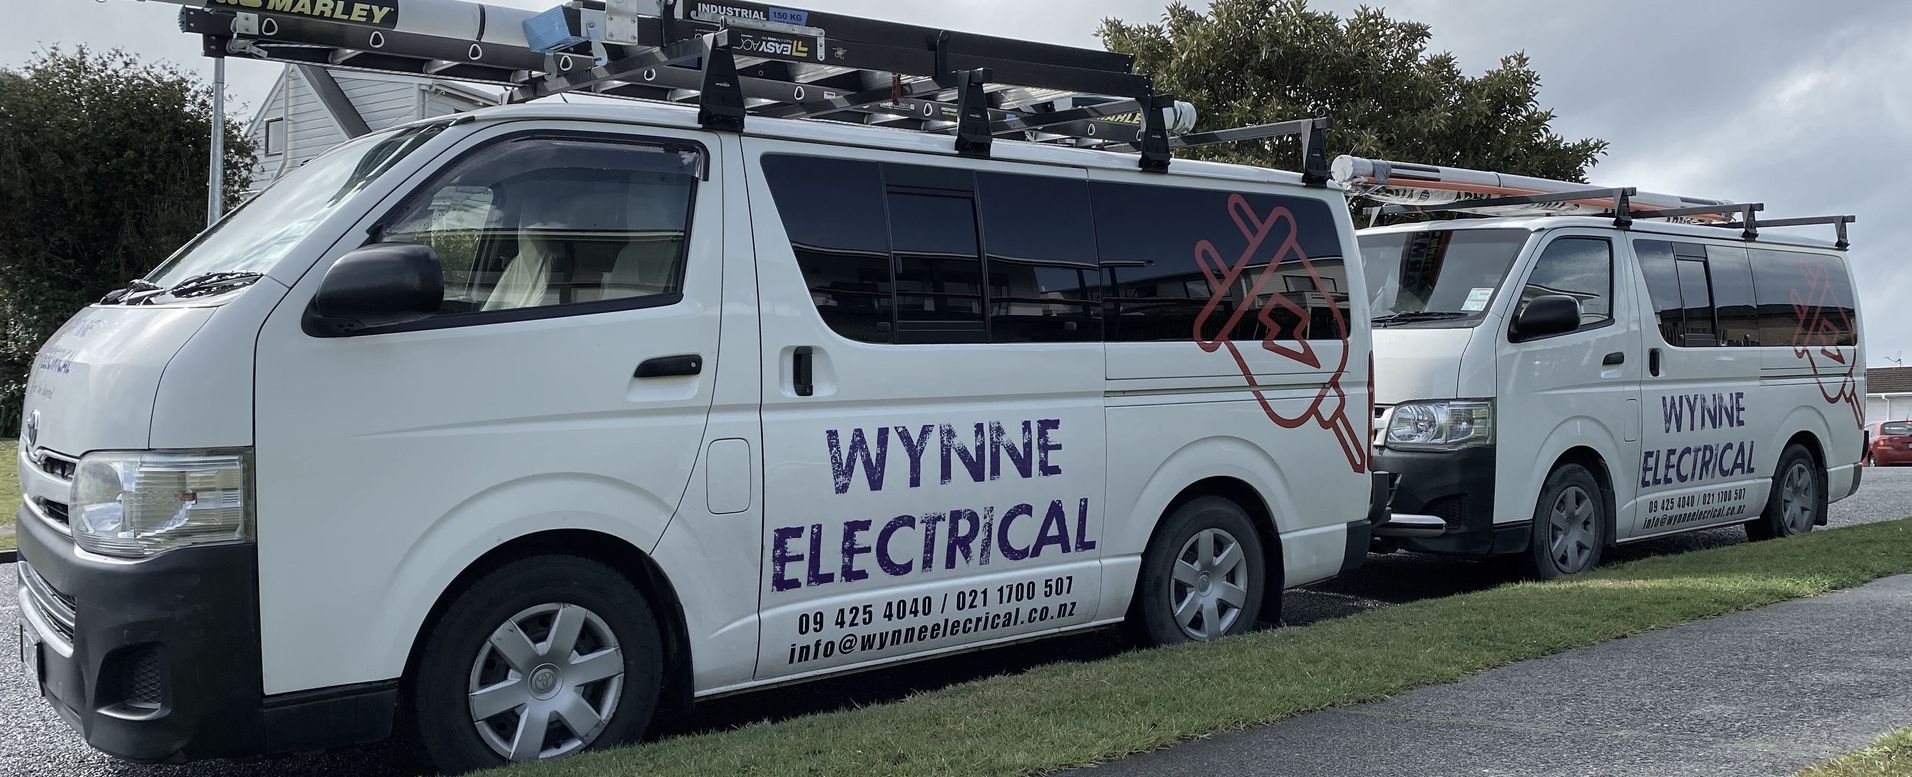 Wynne Electrical Banner image